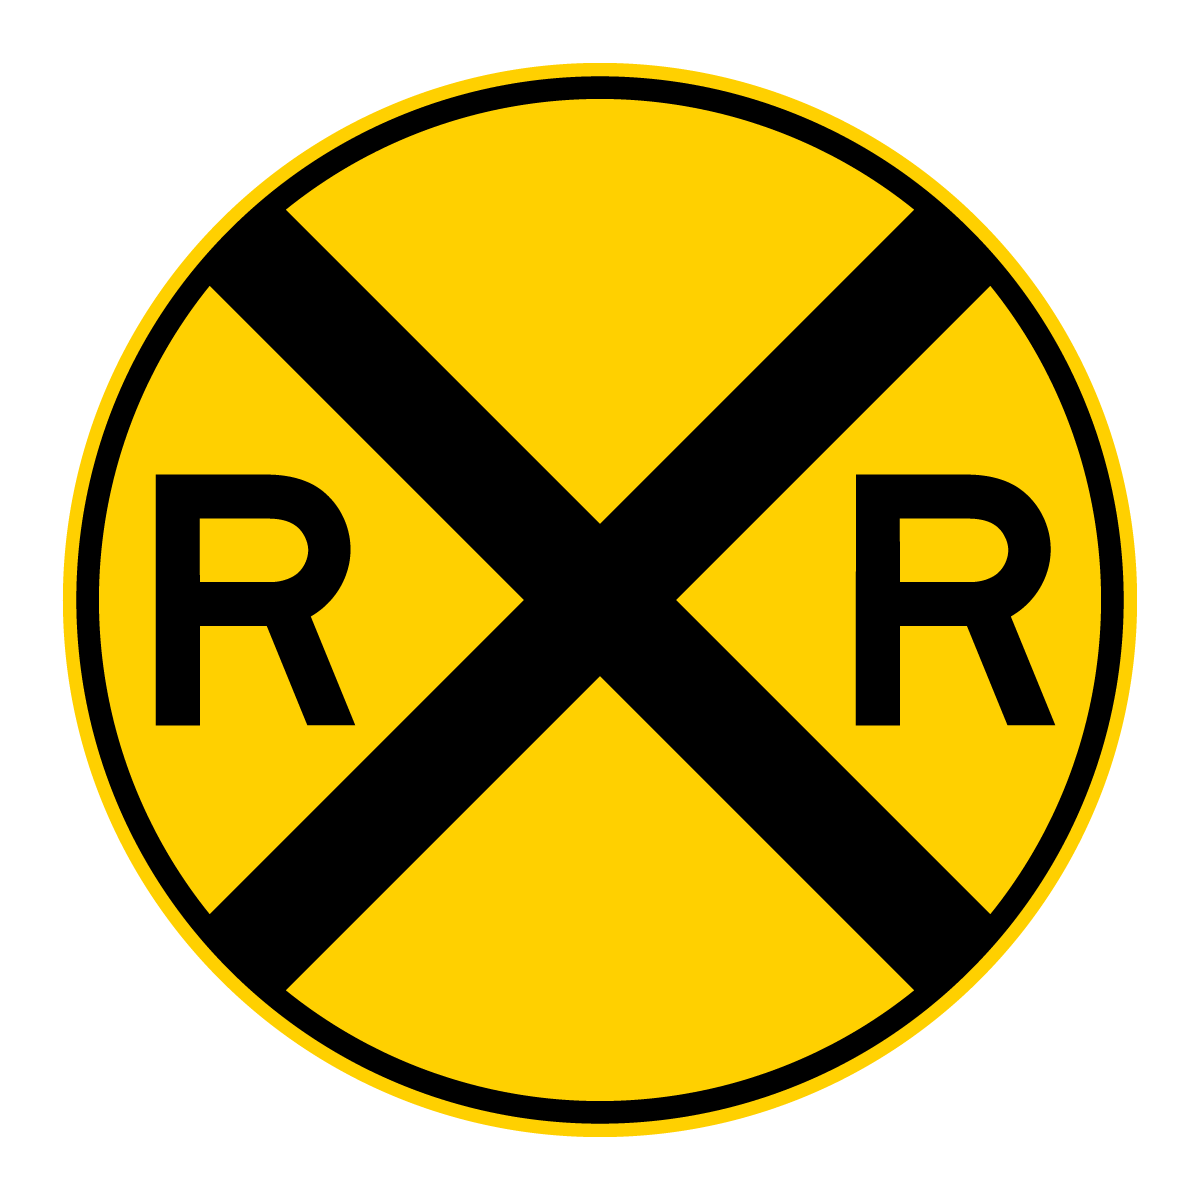 W10-1 Railroad Crossing Warning